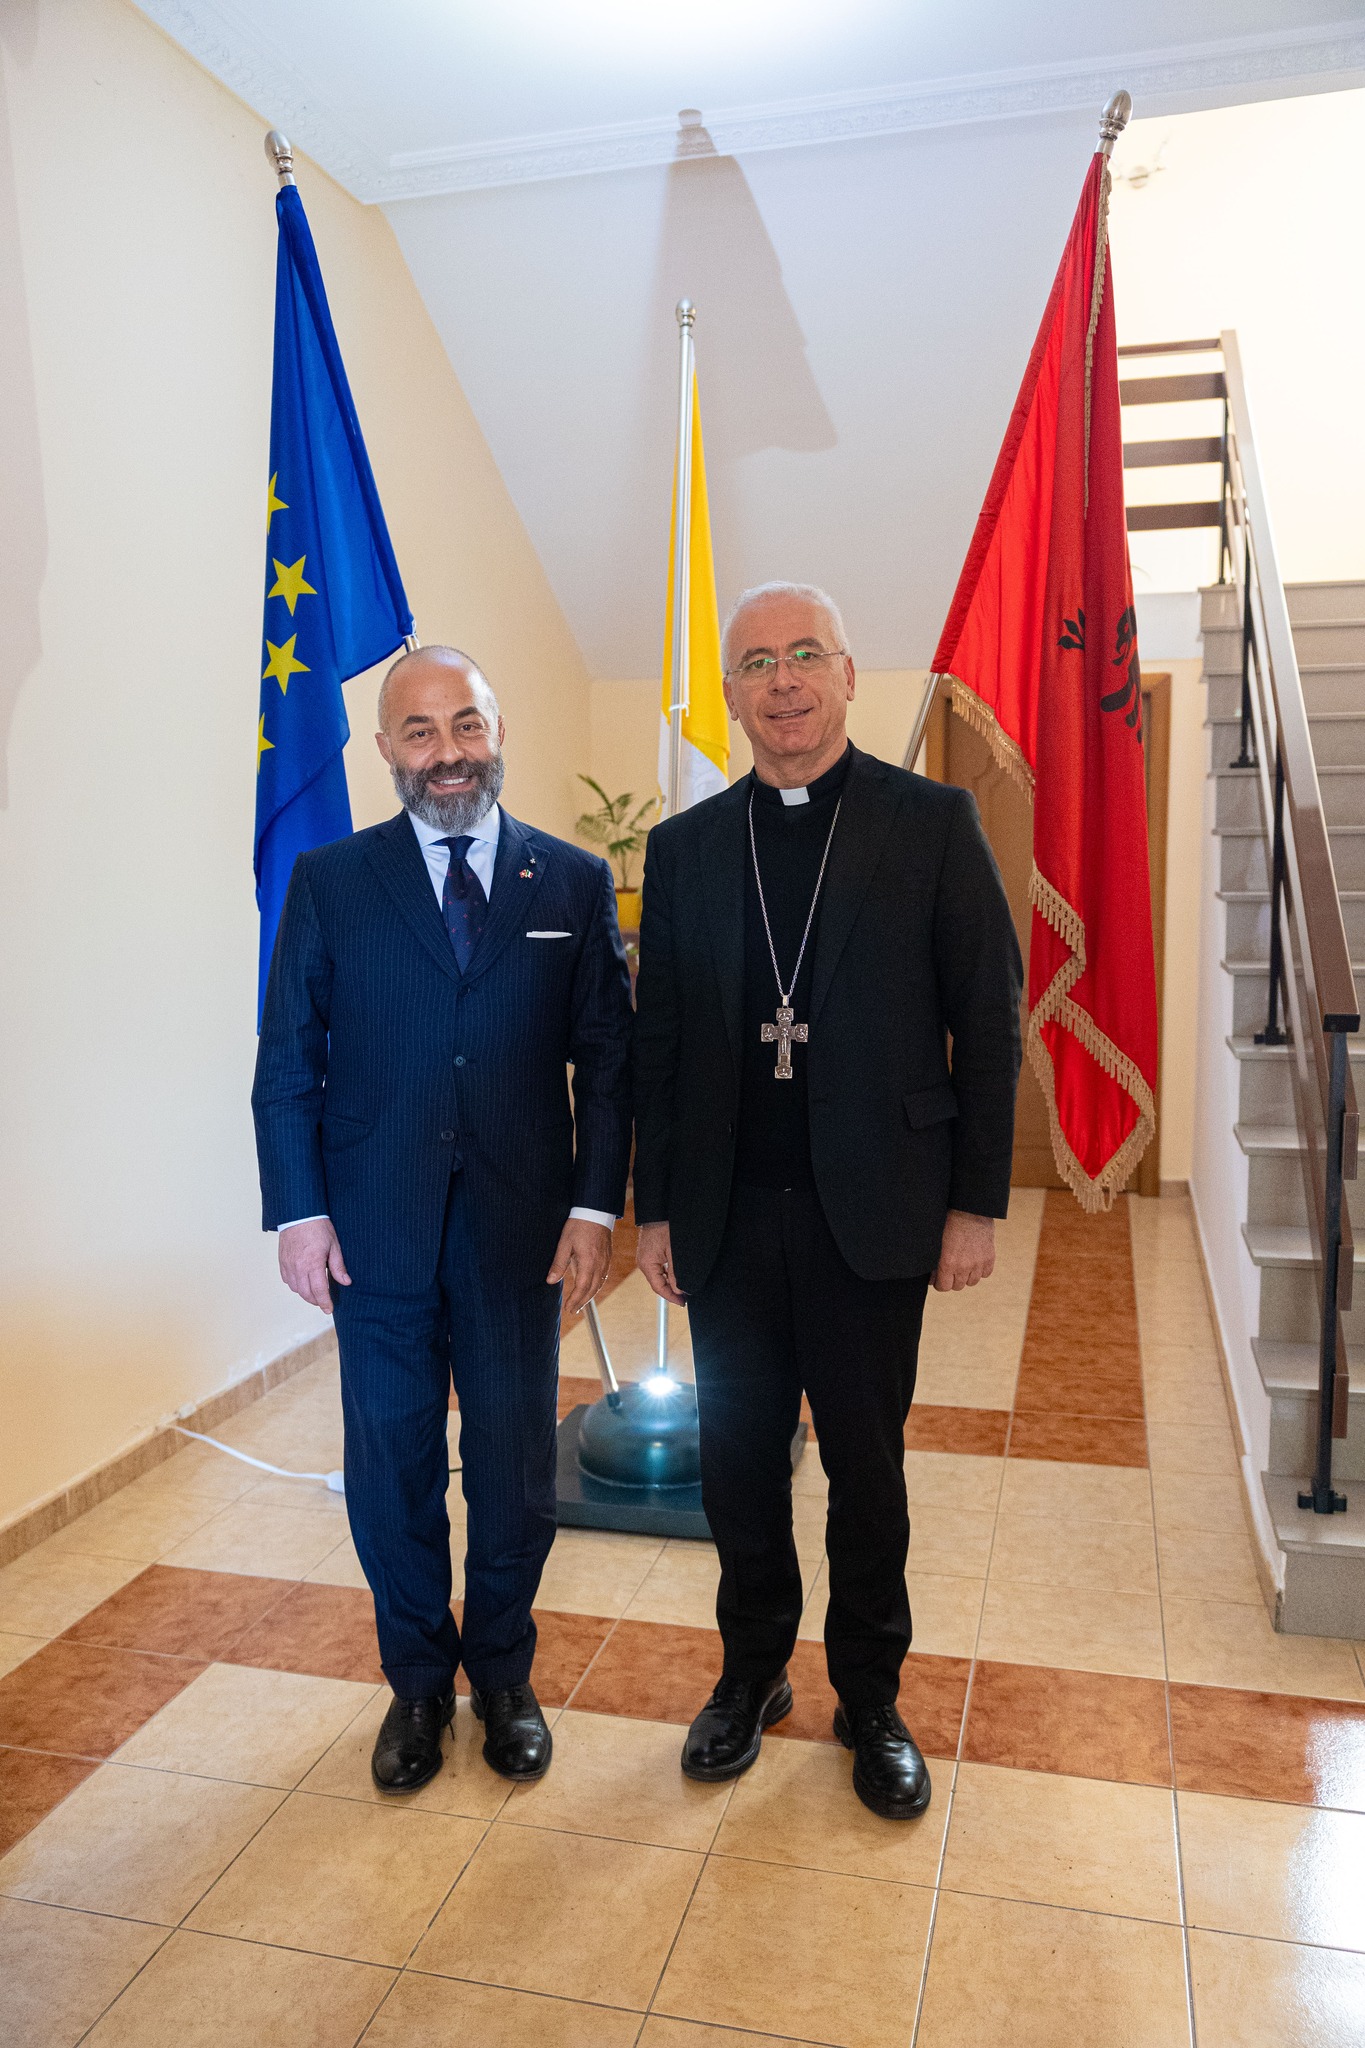 Courtesy visit of Ambassador Palumbo to H.E. Monsignor Giovanni Peragine, Bishop of Southern Albania in Vlora